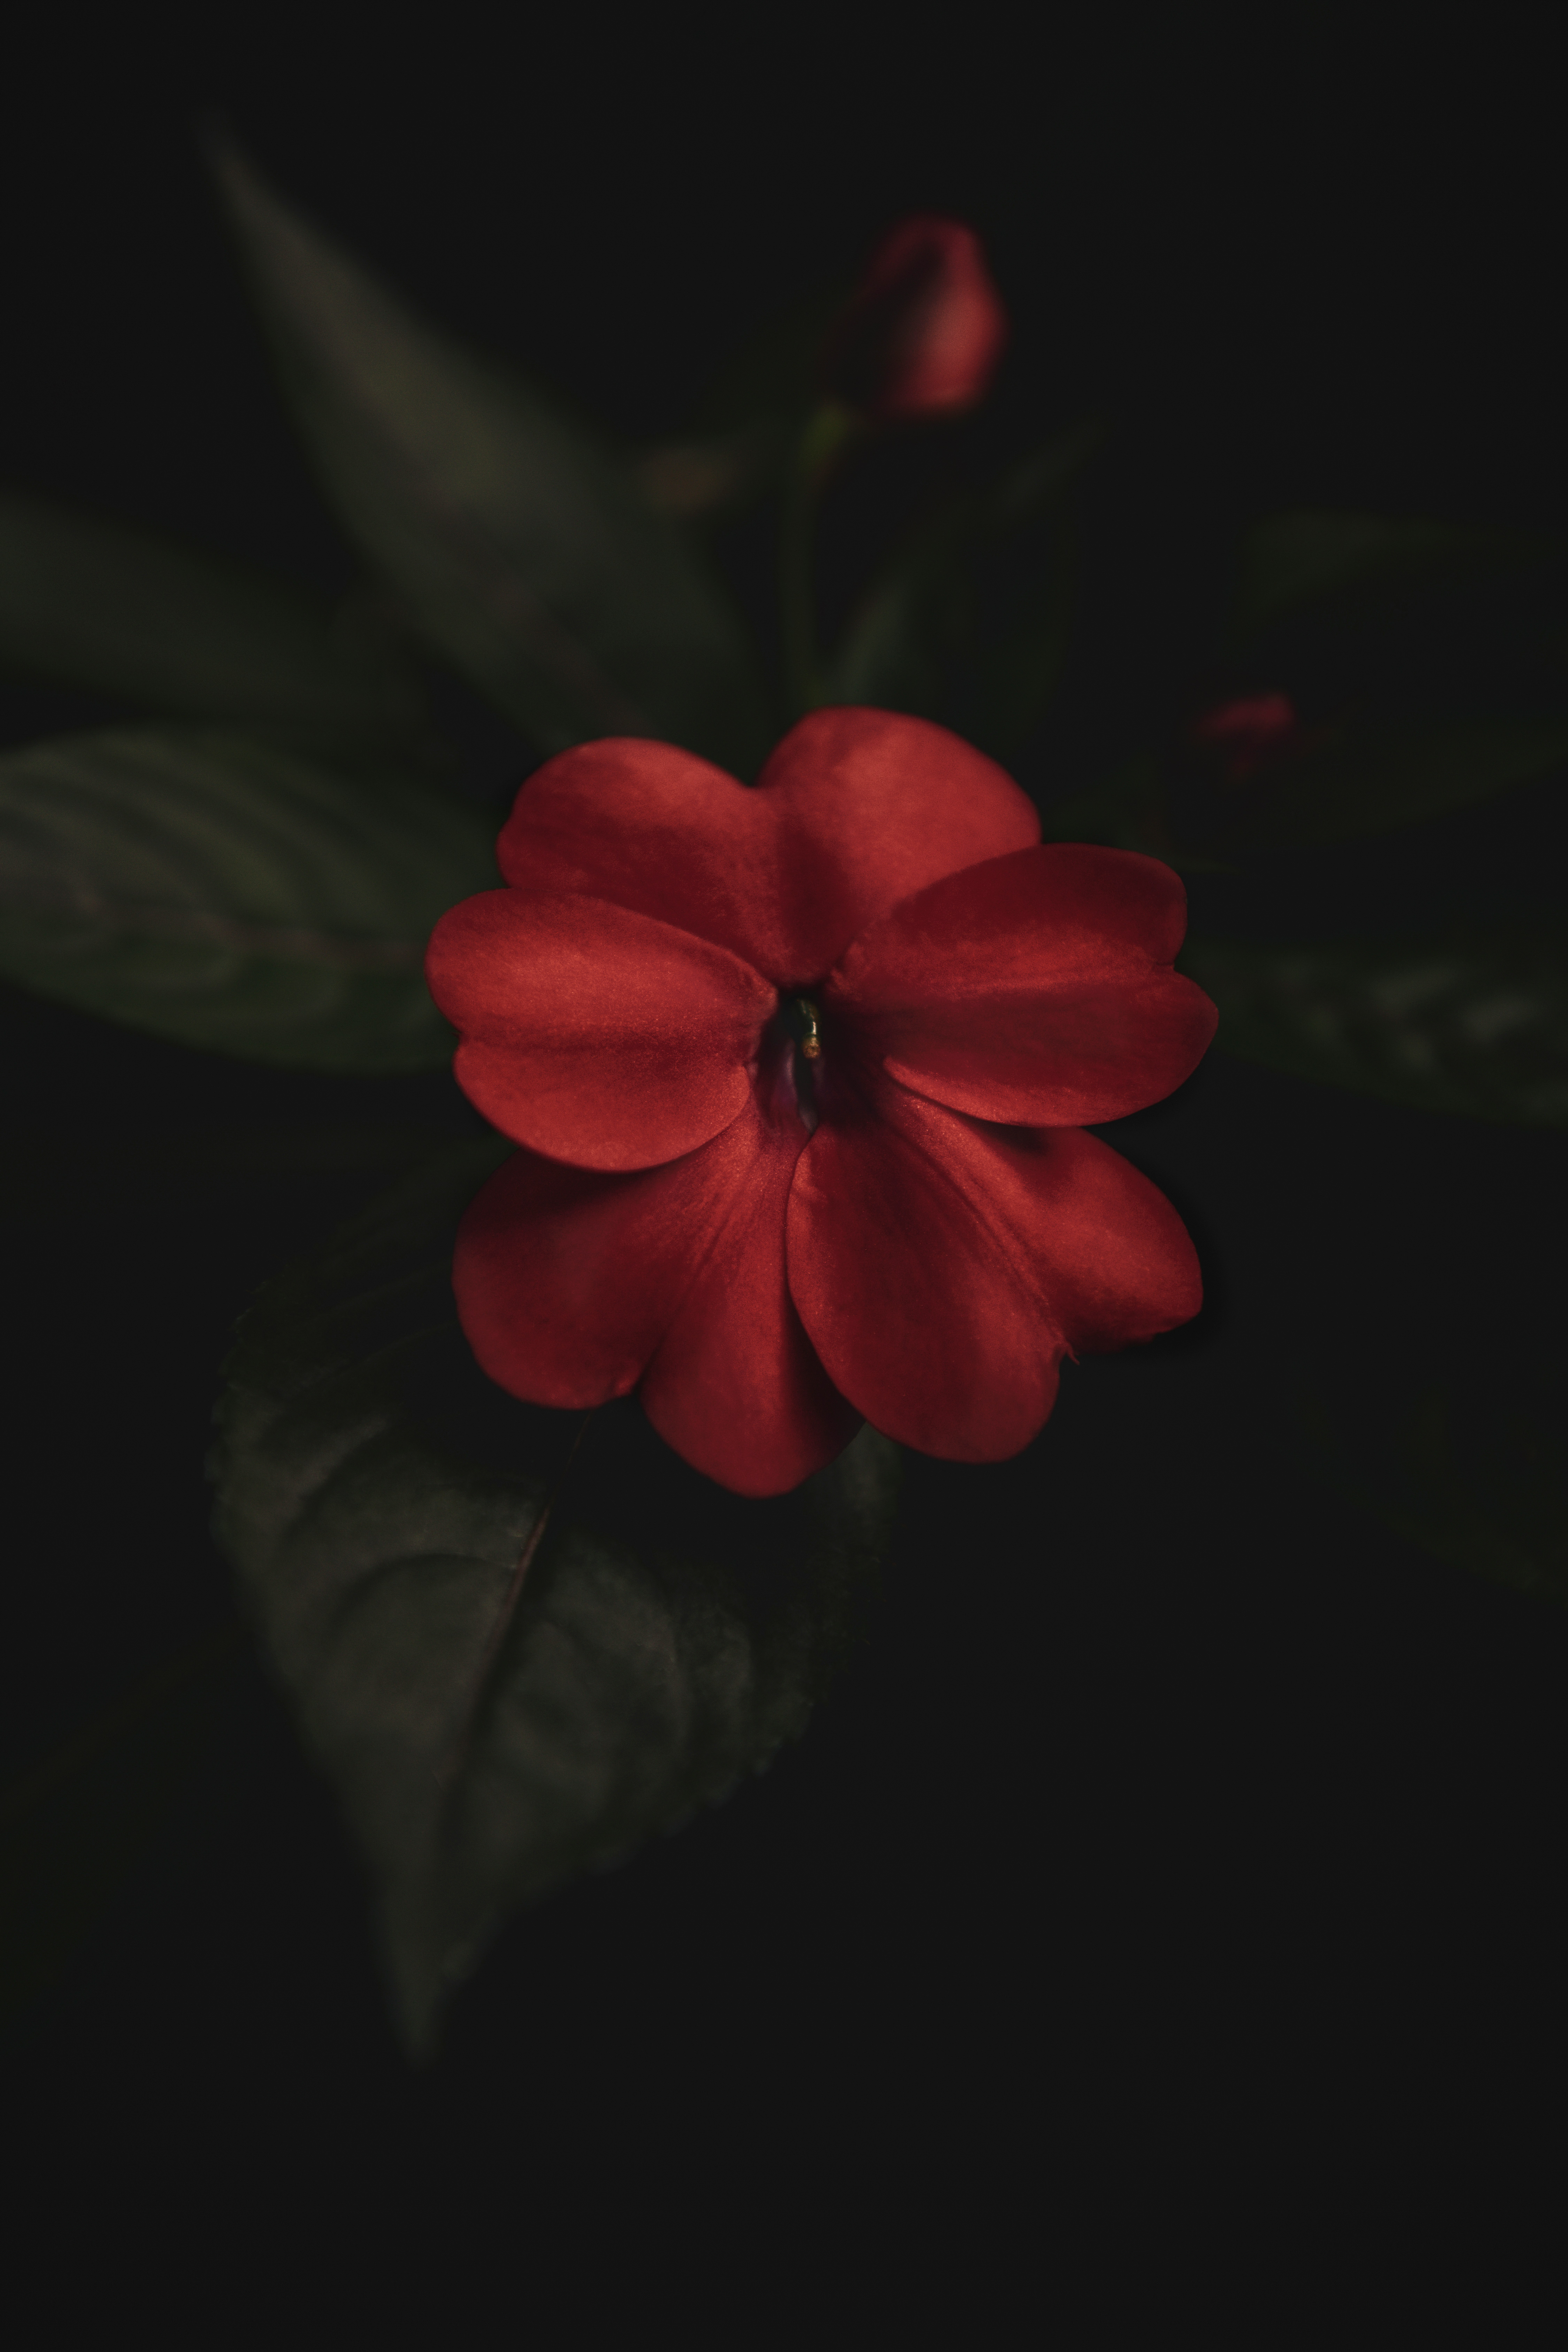 red flower in black background